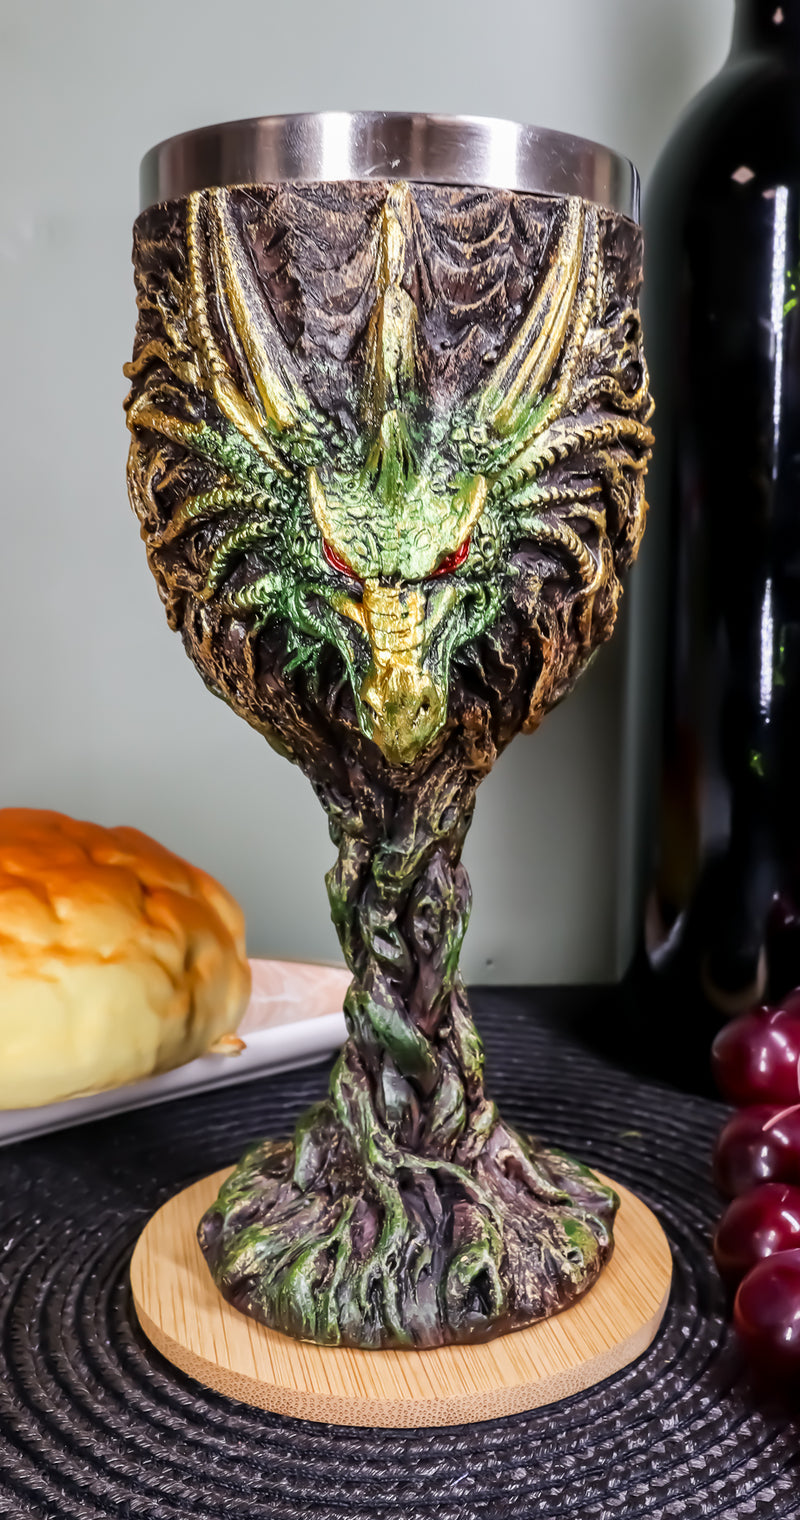 Ebros Dryad Greenman Earth Dragon 5oz Wine Goblet Chalice Cup Fantasy Decor